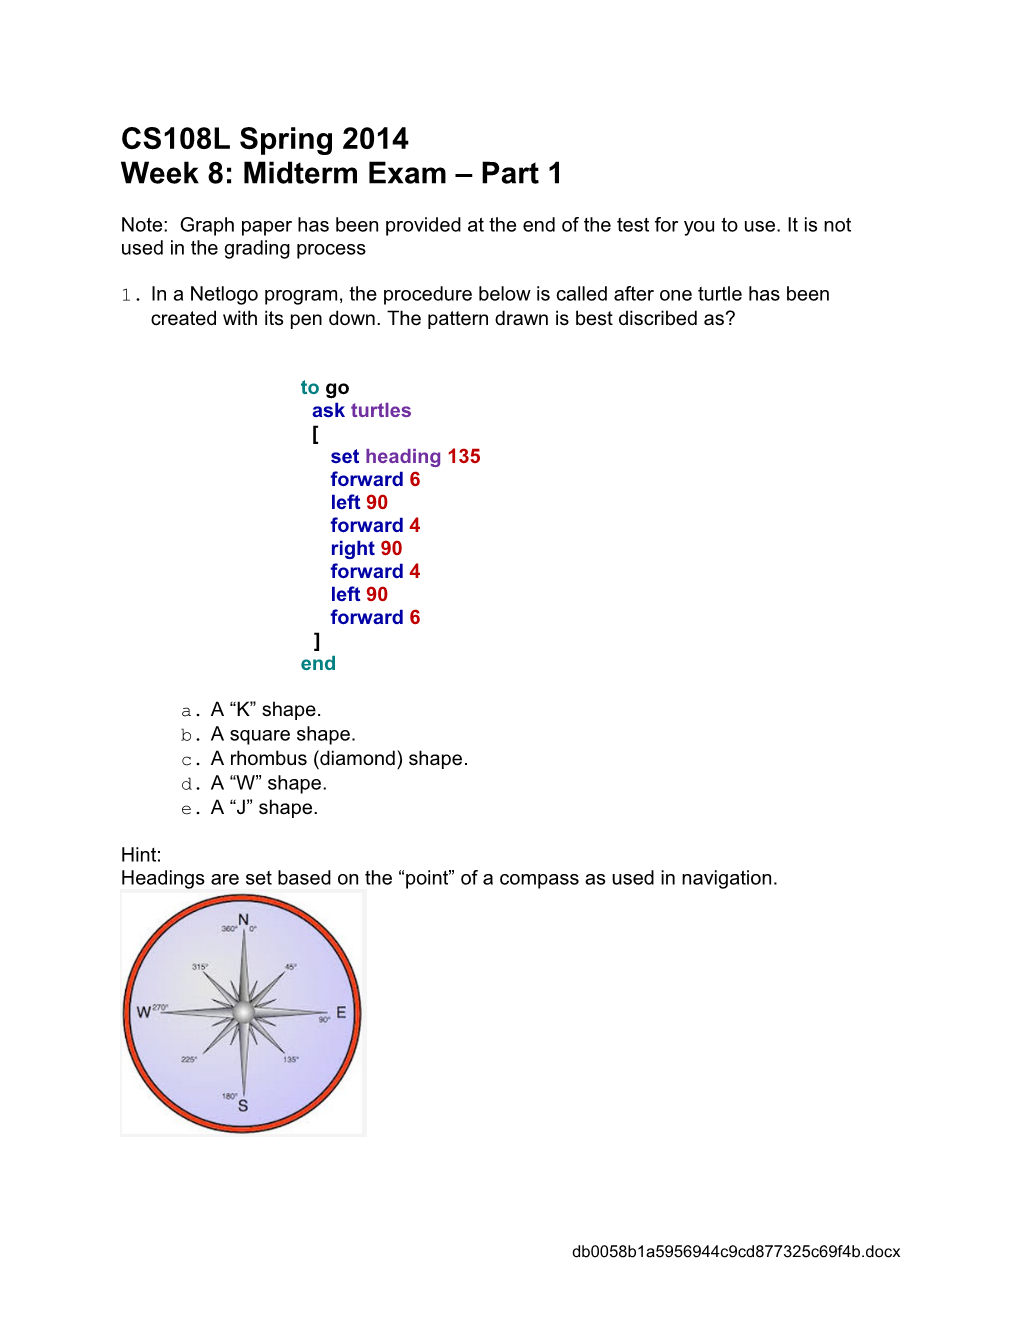 Week 8: Midterm Exam Part 1